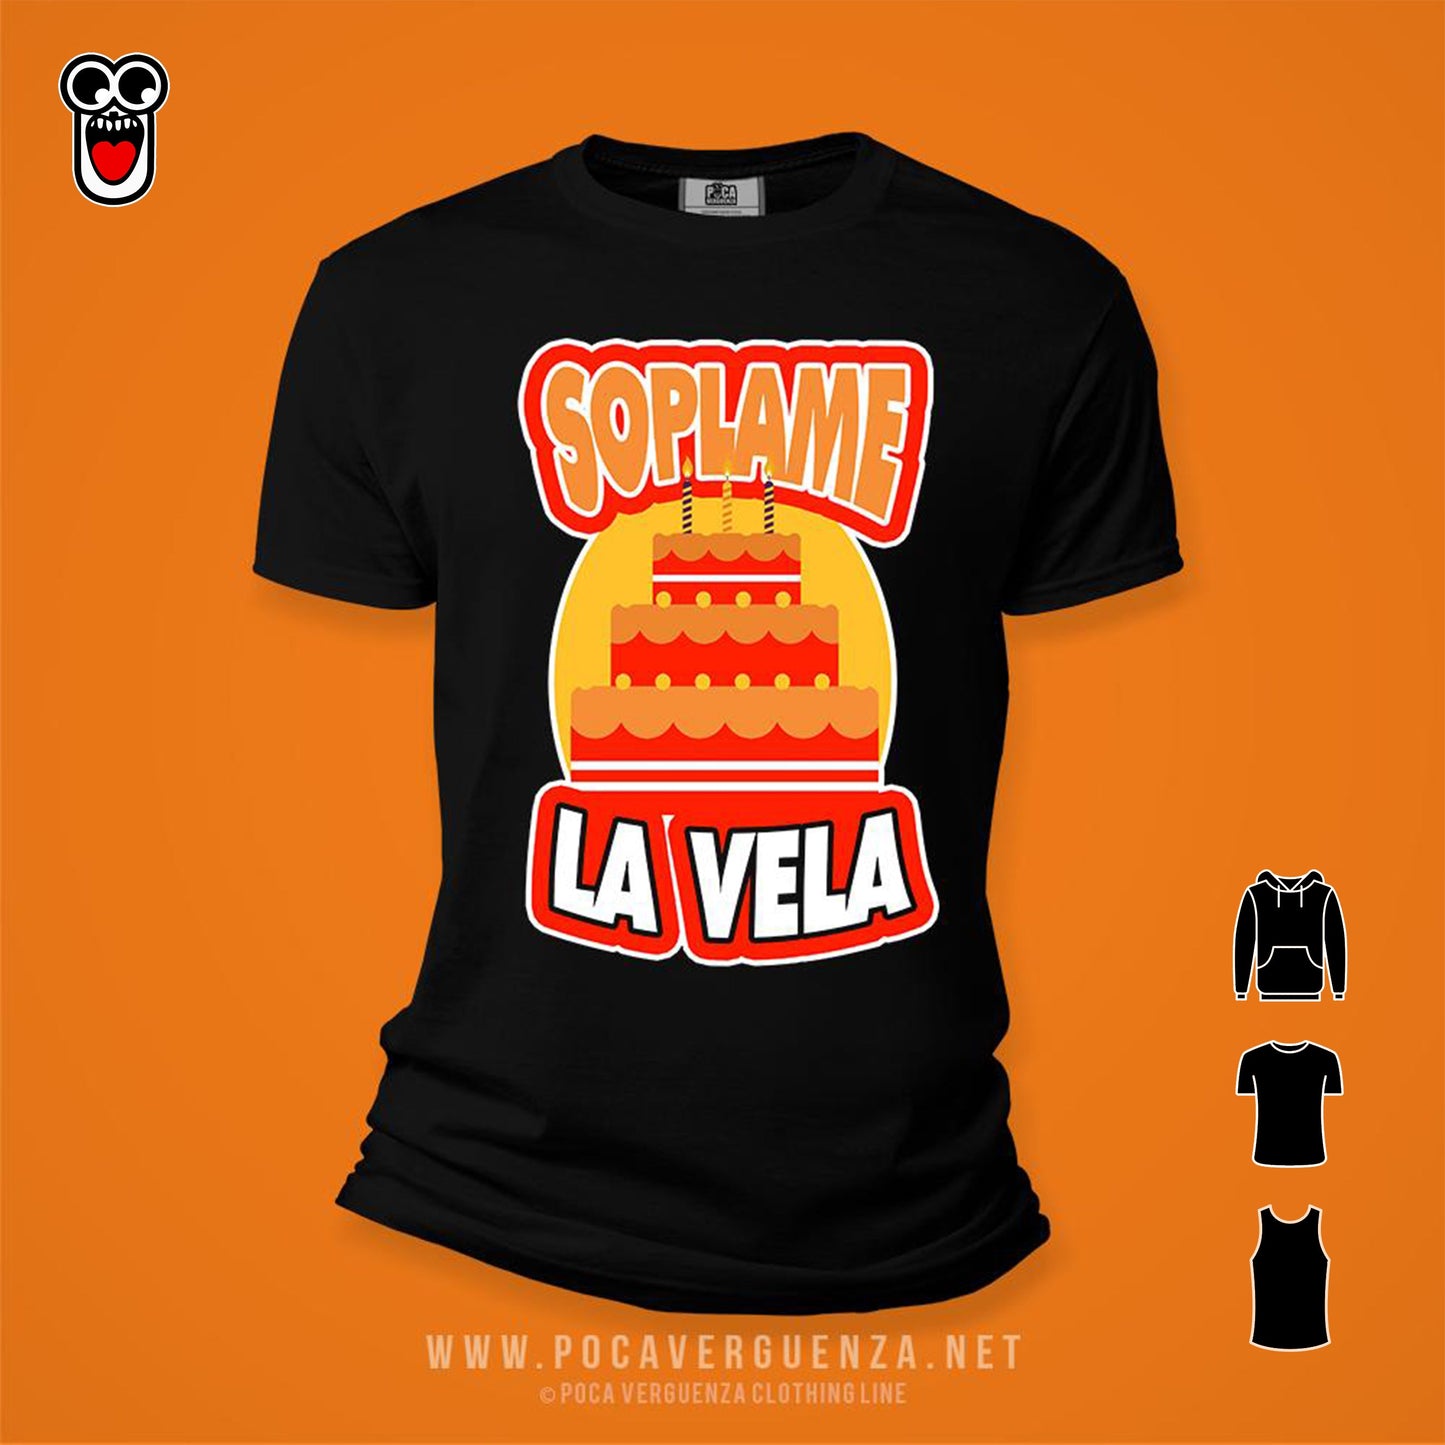 Sóplame La Vela pocaverguenzapr Camisetas (4412938879066)